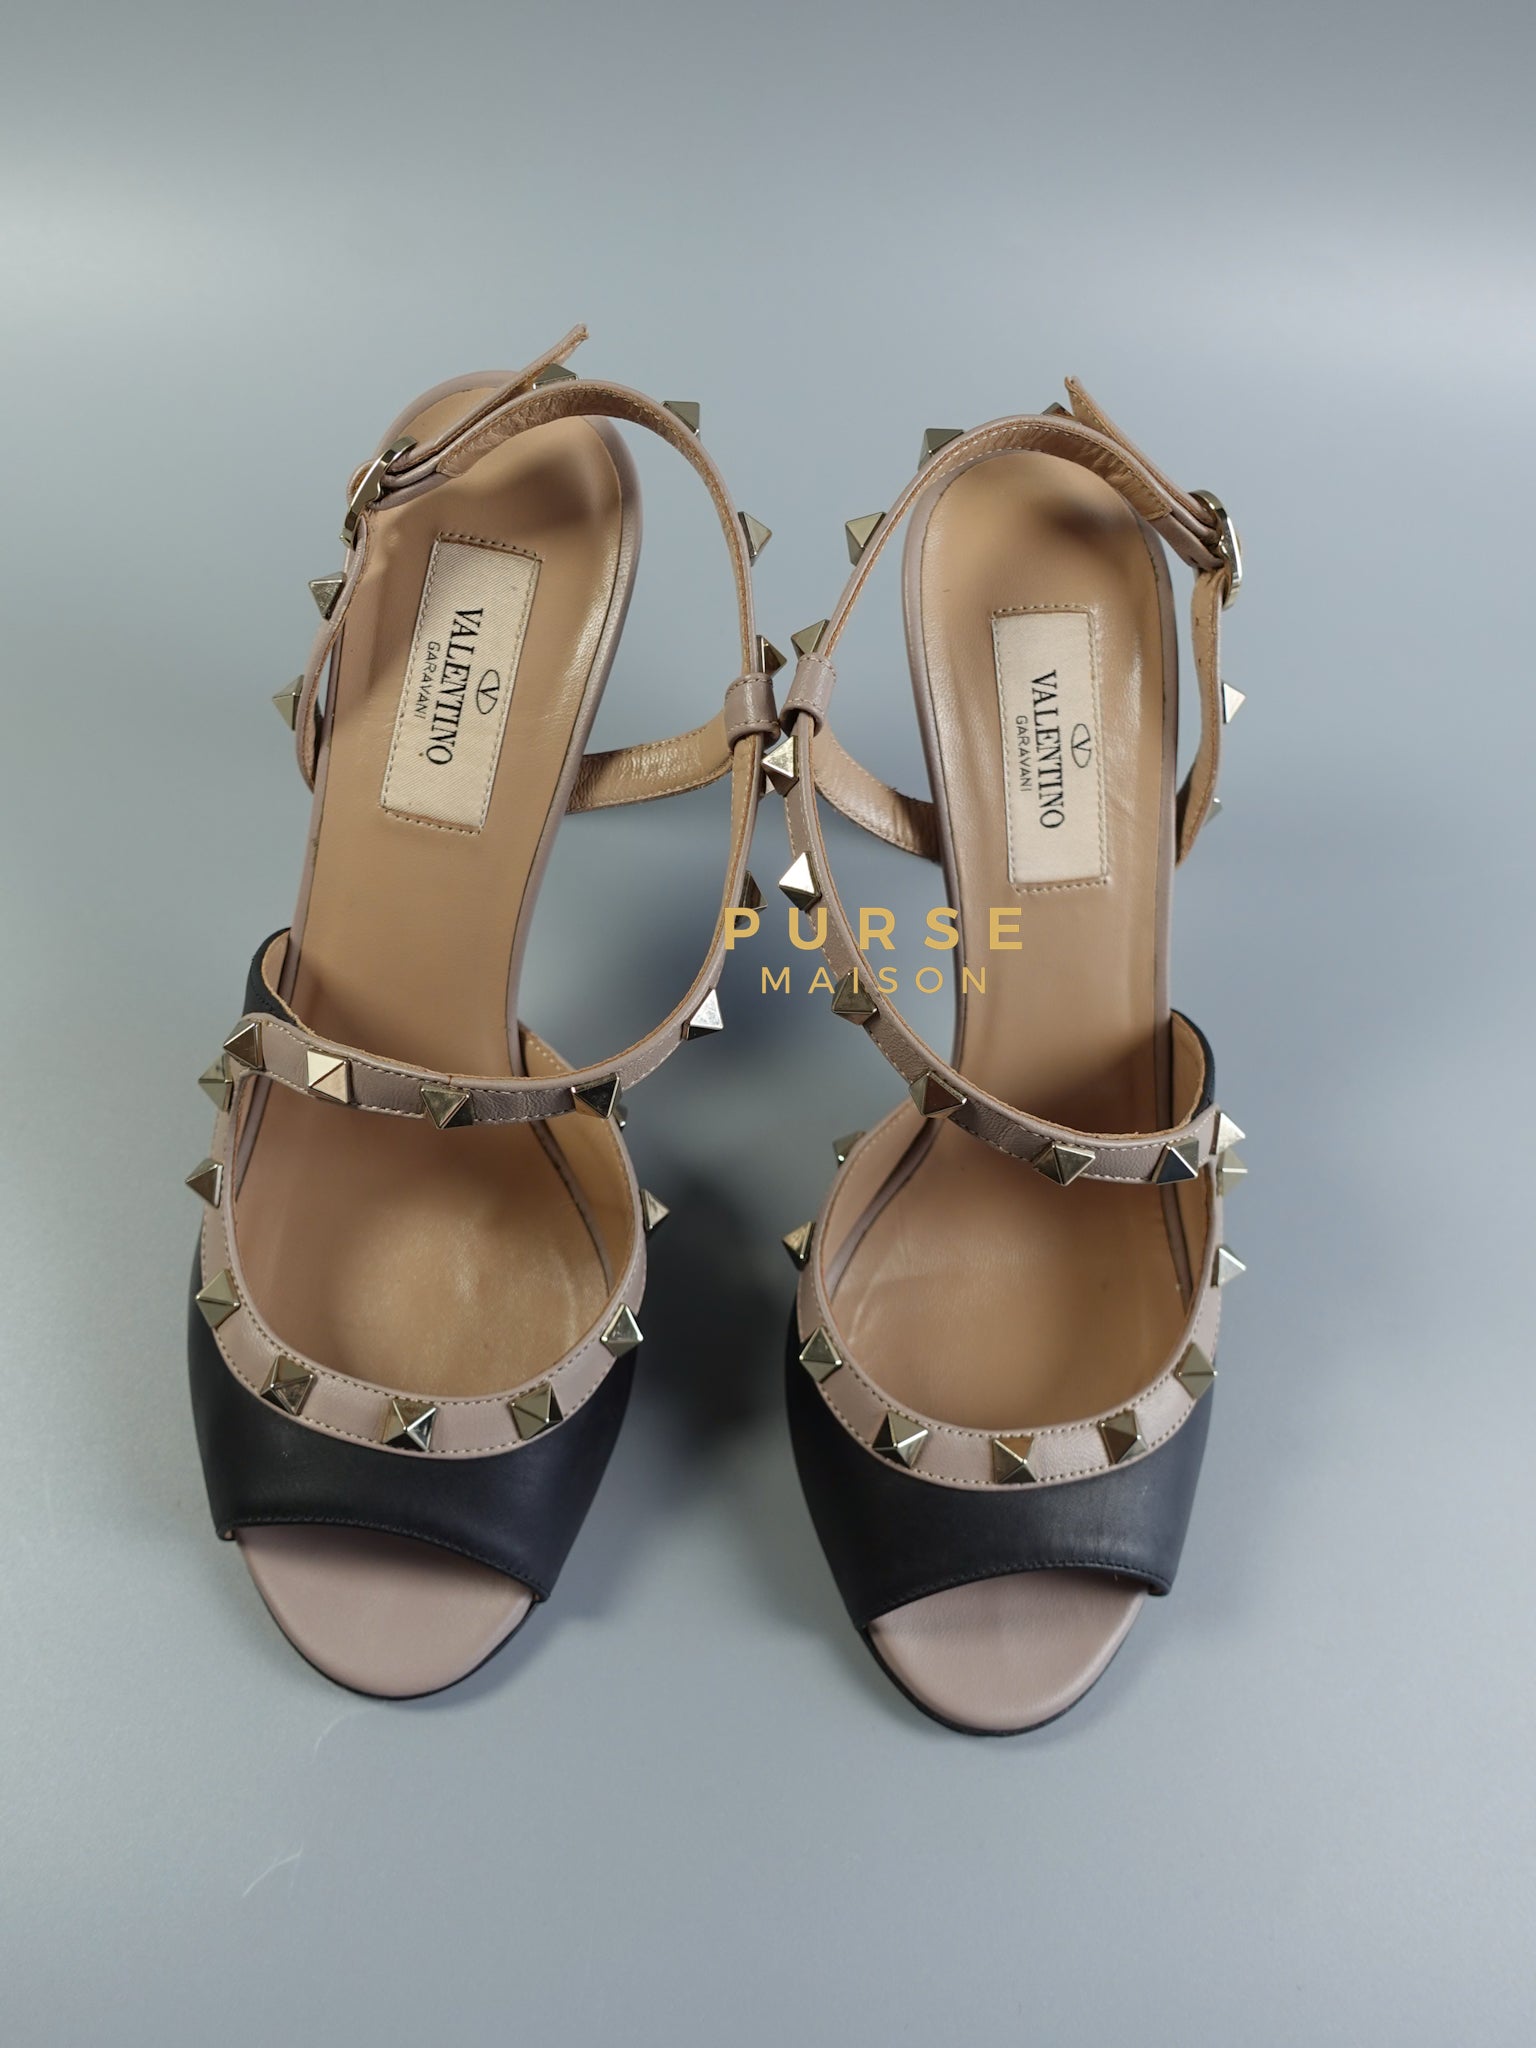 Rockstud Peep-toe Cross Straps High Heels Sandals (Black/Nude) Size 38 EU (25.5cm) | Purse Maison Luxury Bags Shop